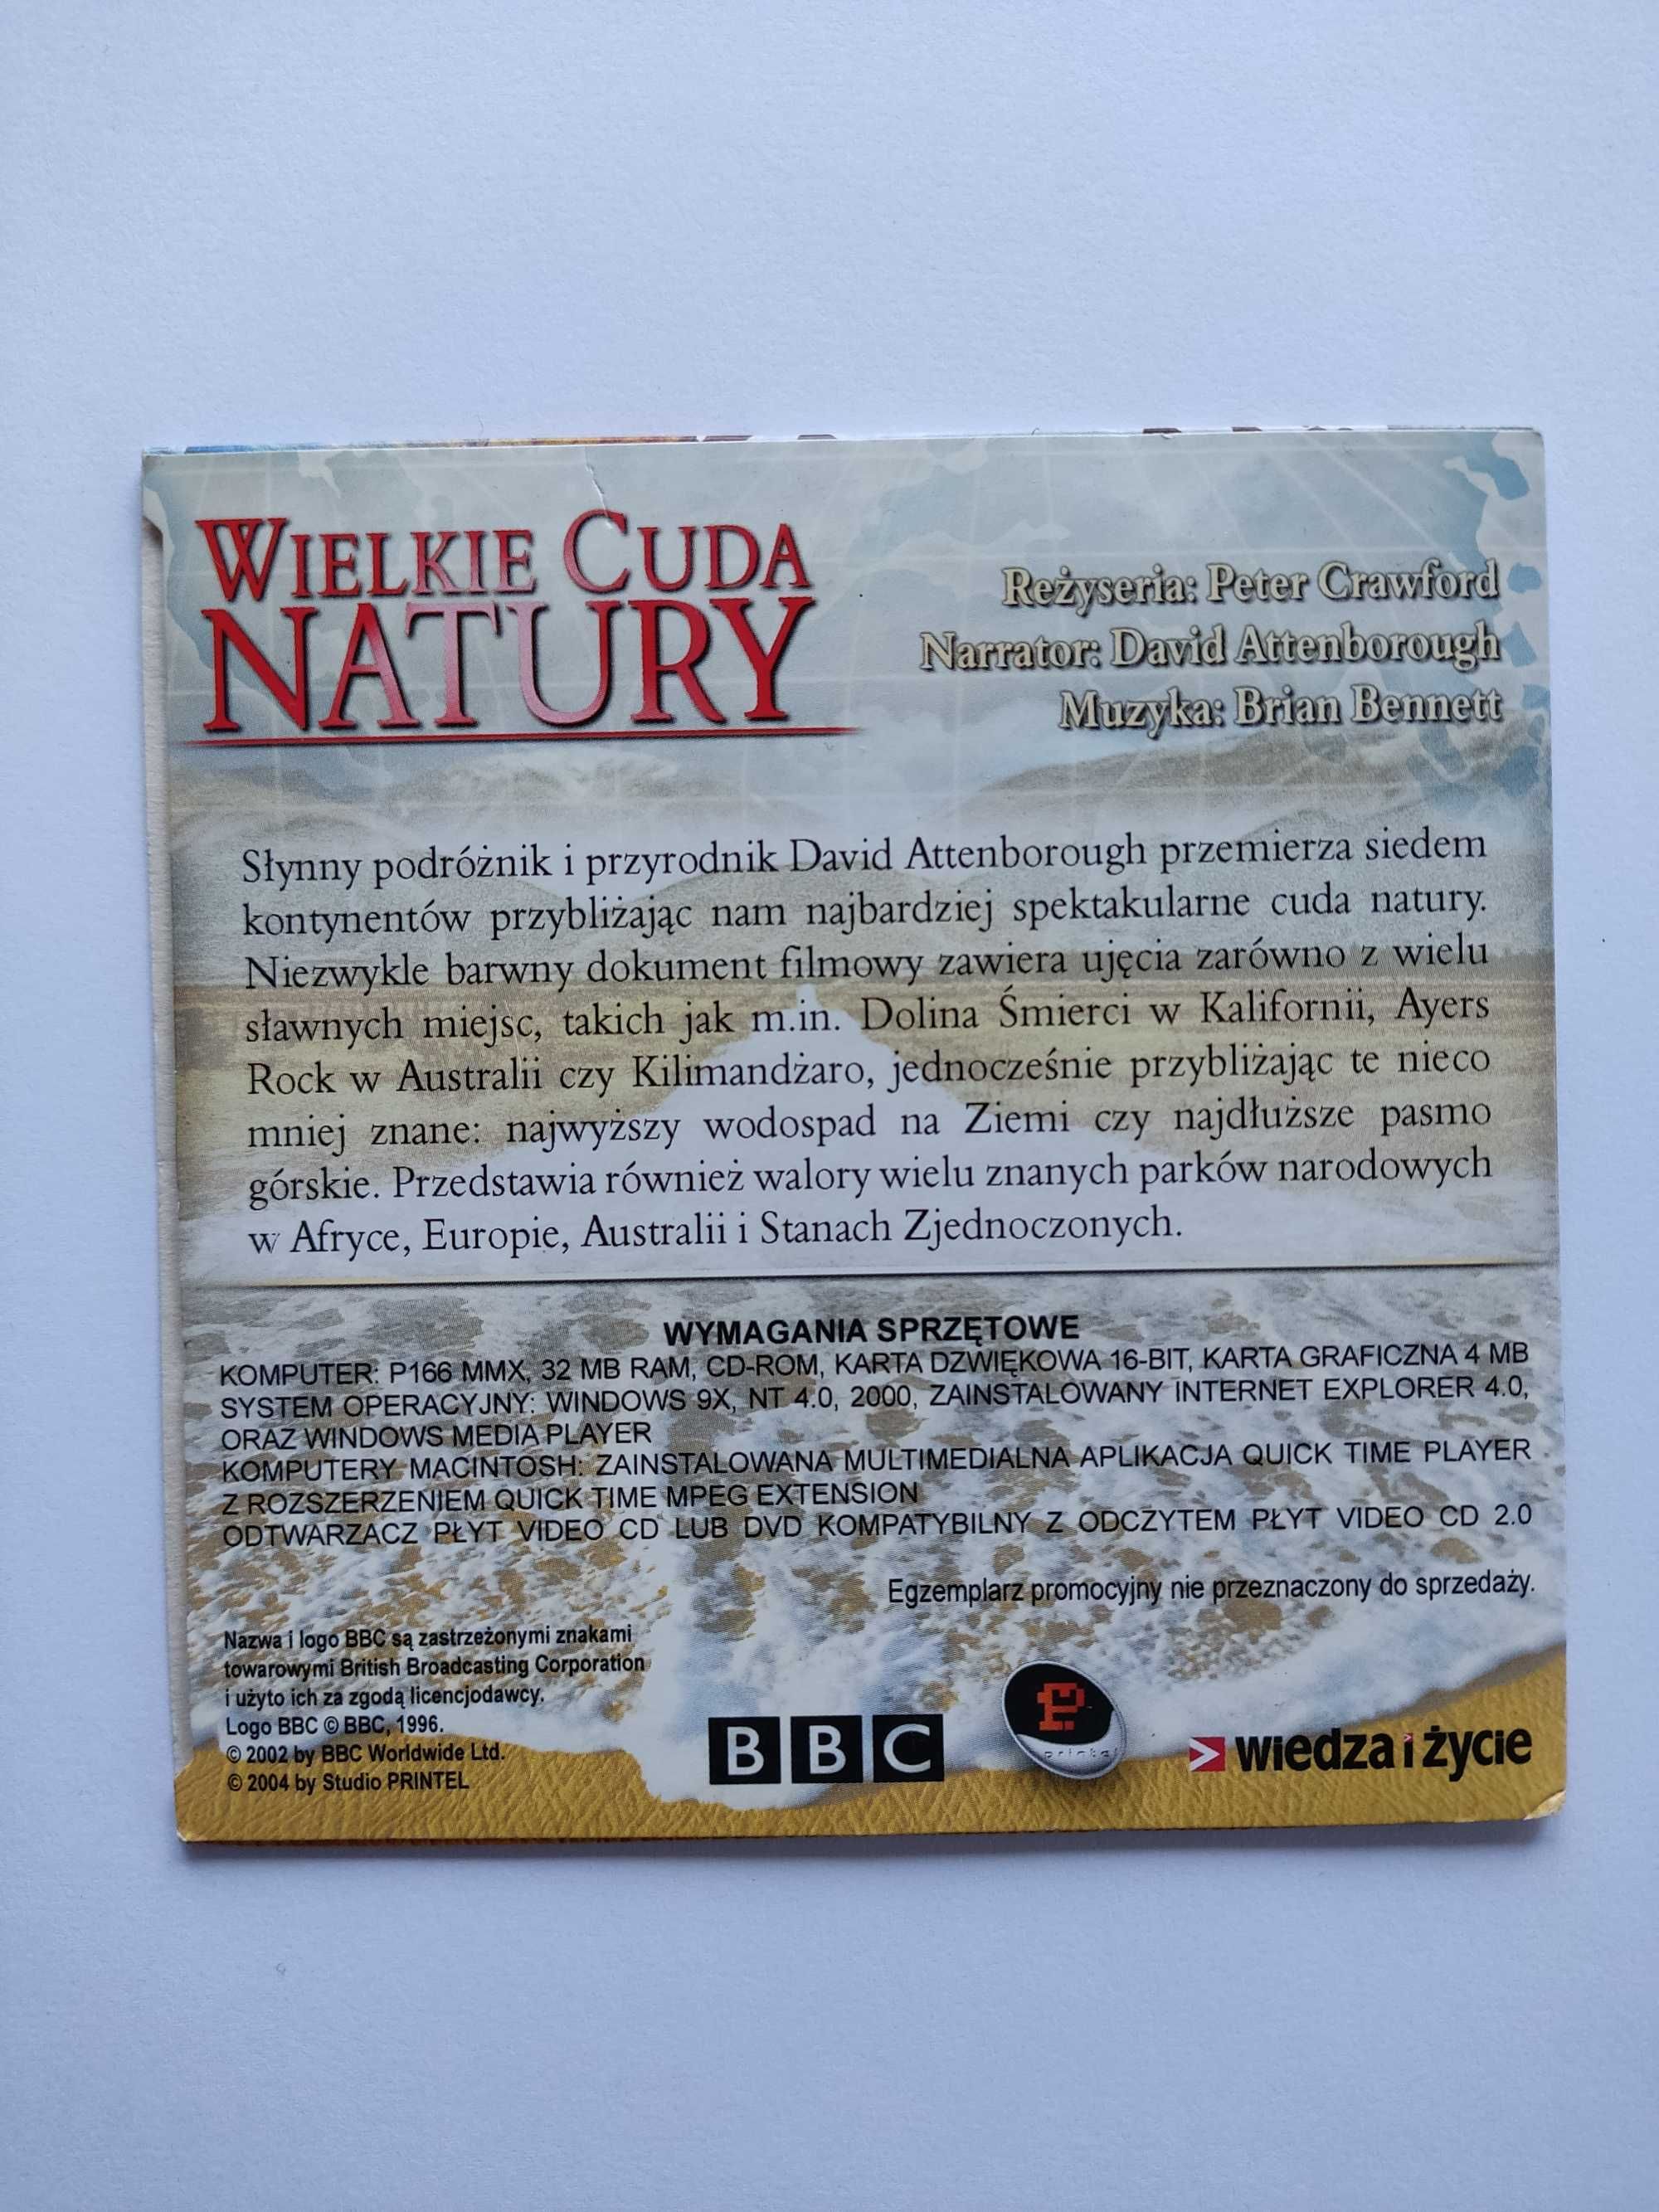 BBC Wielkie cuda natury, David Attenborough